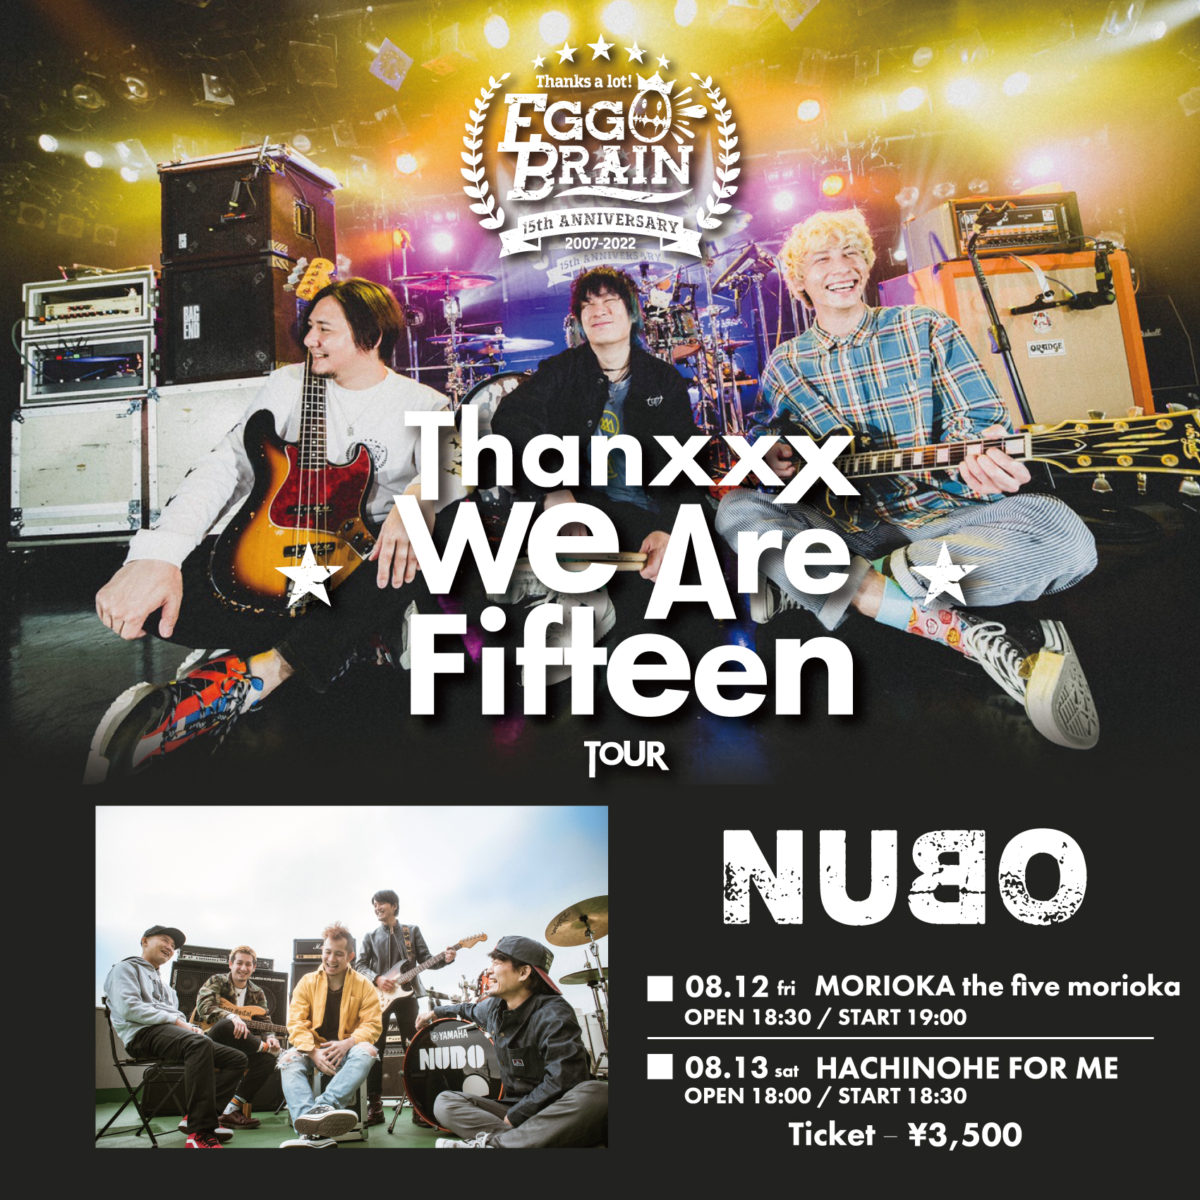 EGG BRAIN 15th ANNIVERSARY TOUR “Thanxxx We Are Fifteen” | EGG BRAIN